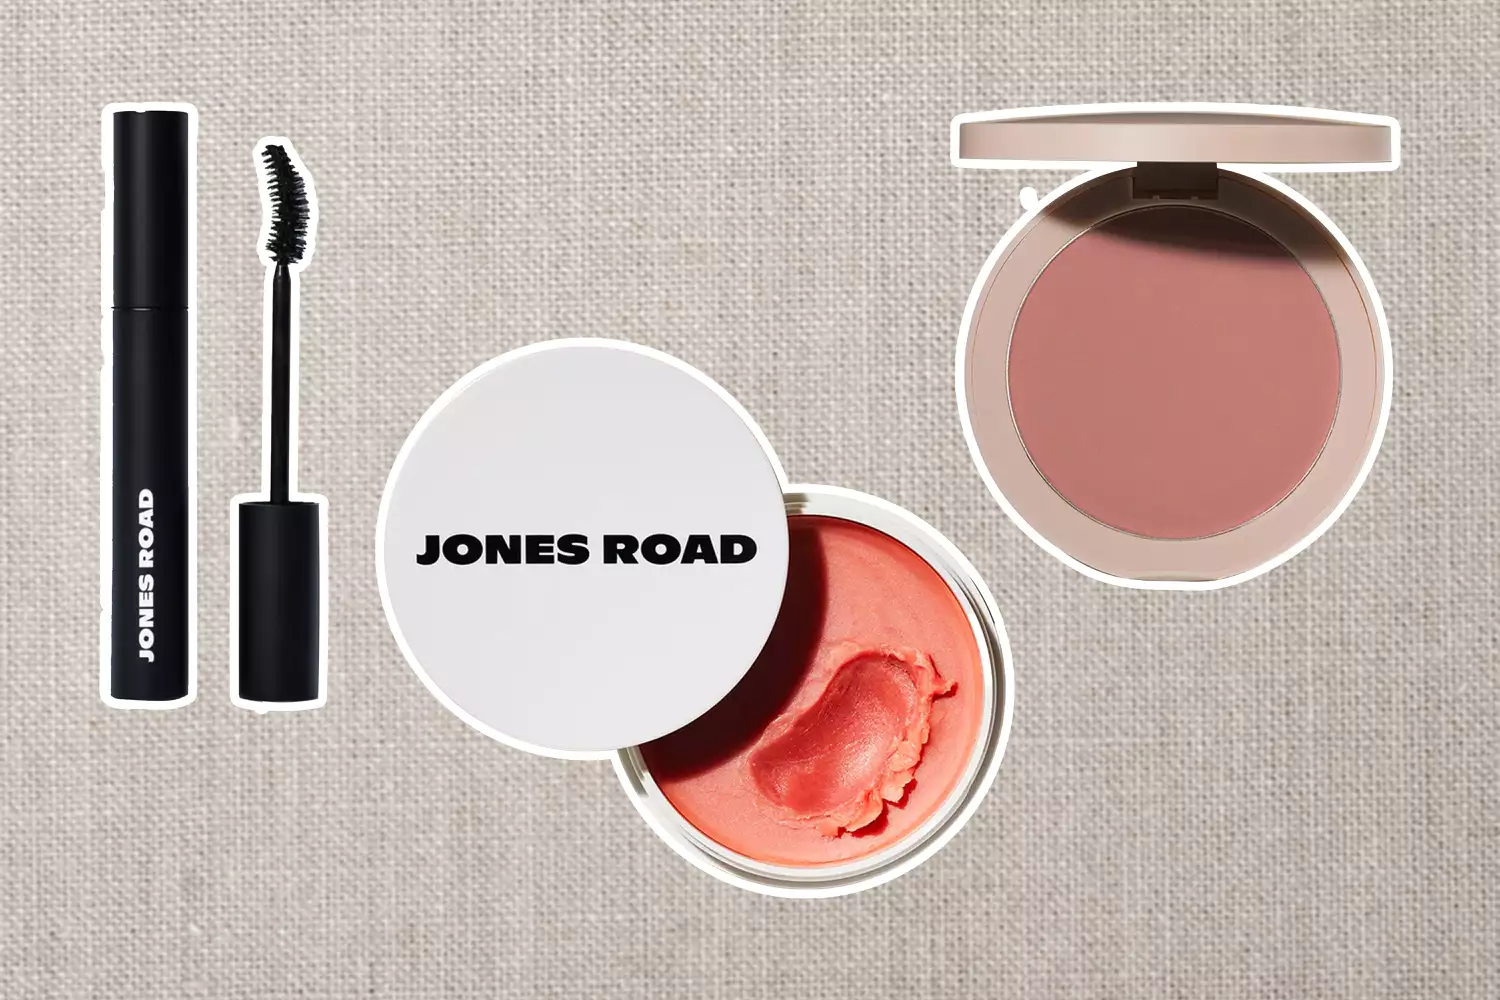 Jone Road Beauty Products